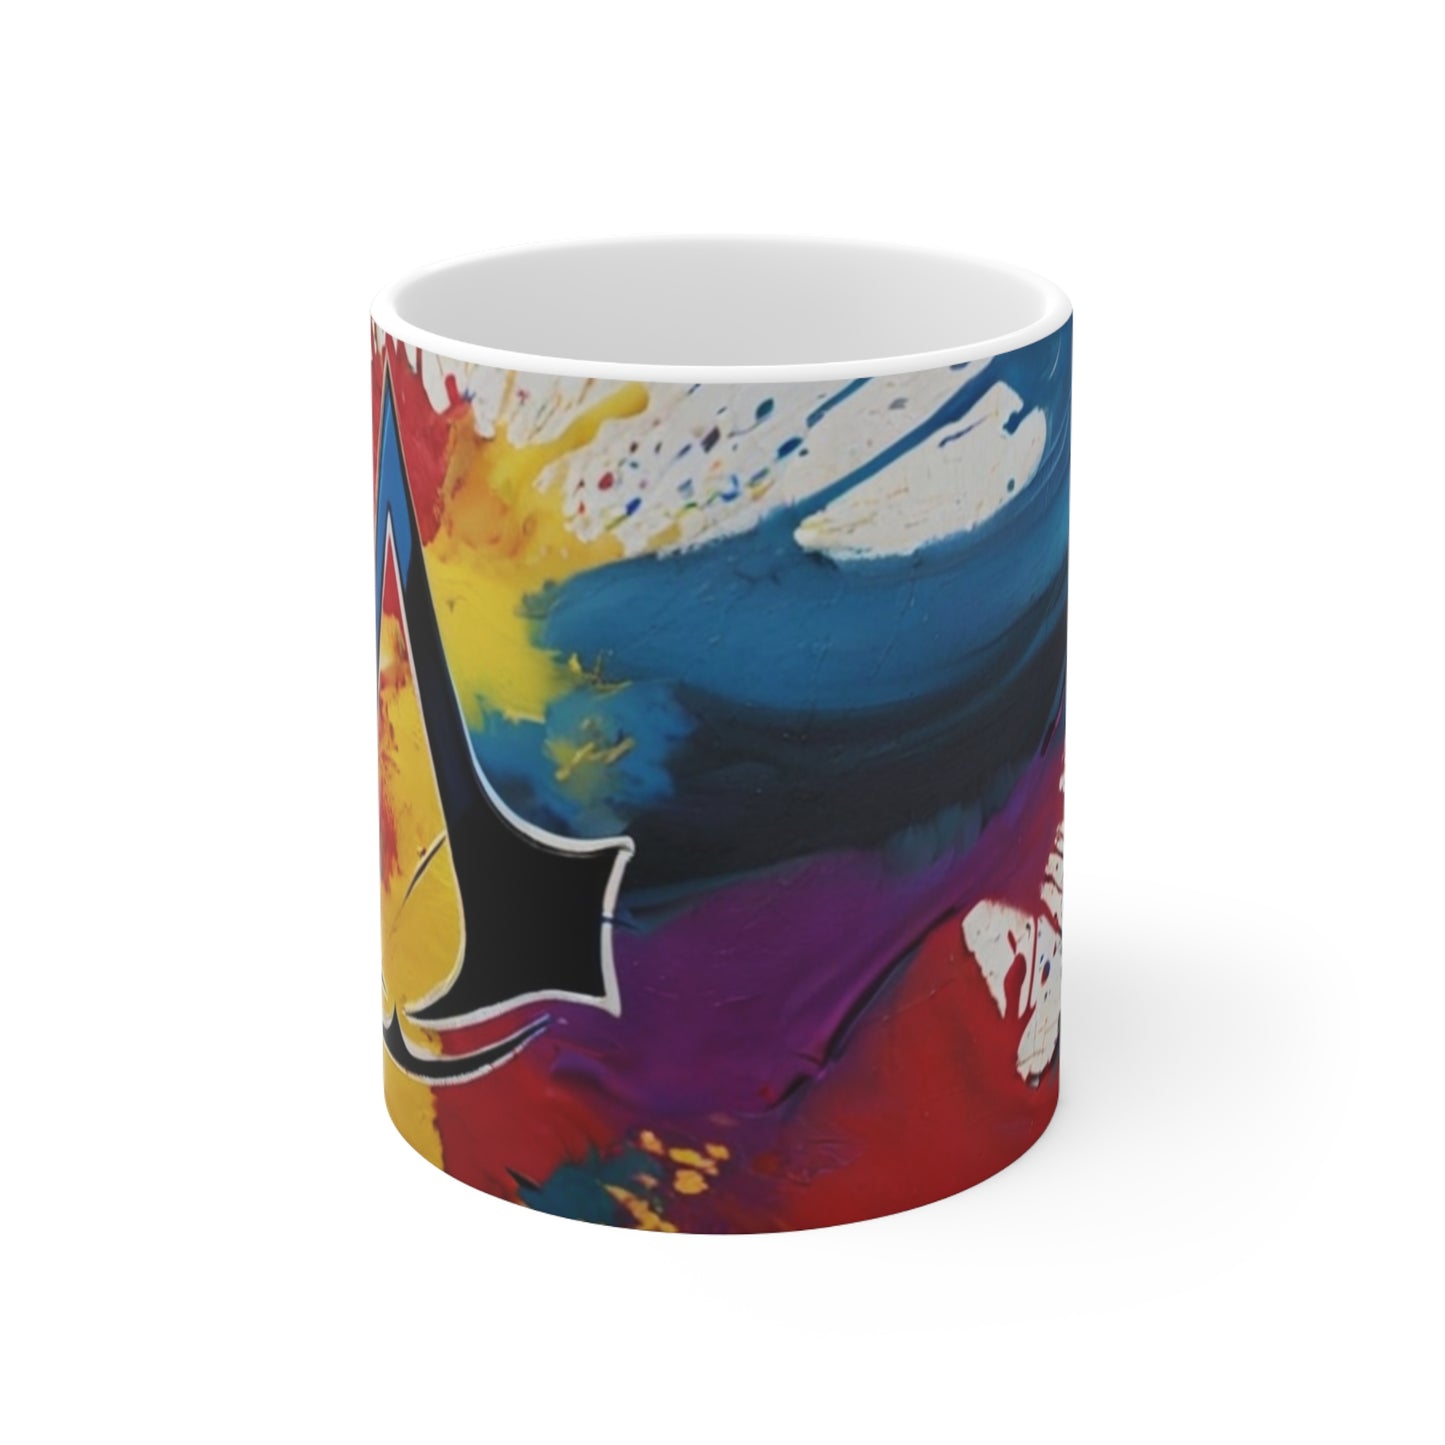 Assassin's Creed Logo Symbol, Messy Paint Splatter Mug - Ceramic Coffee Mug 11oz